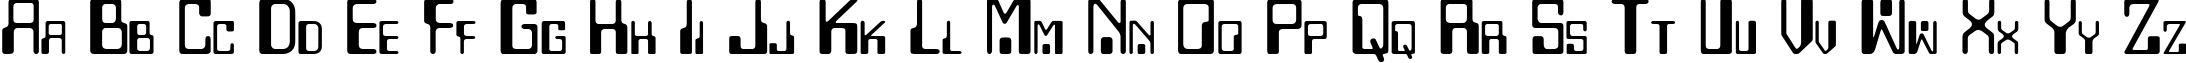 Пример написания английского алфавита шрифтом Checkbook